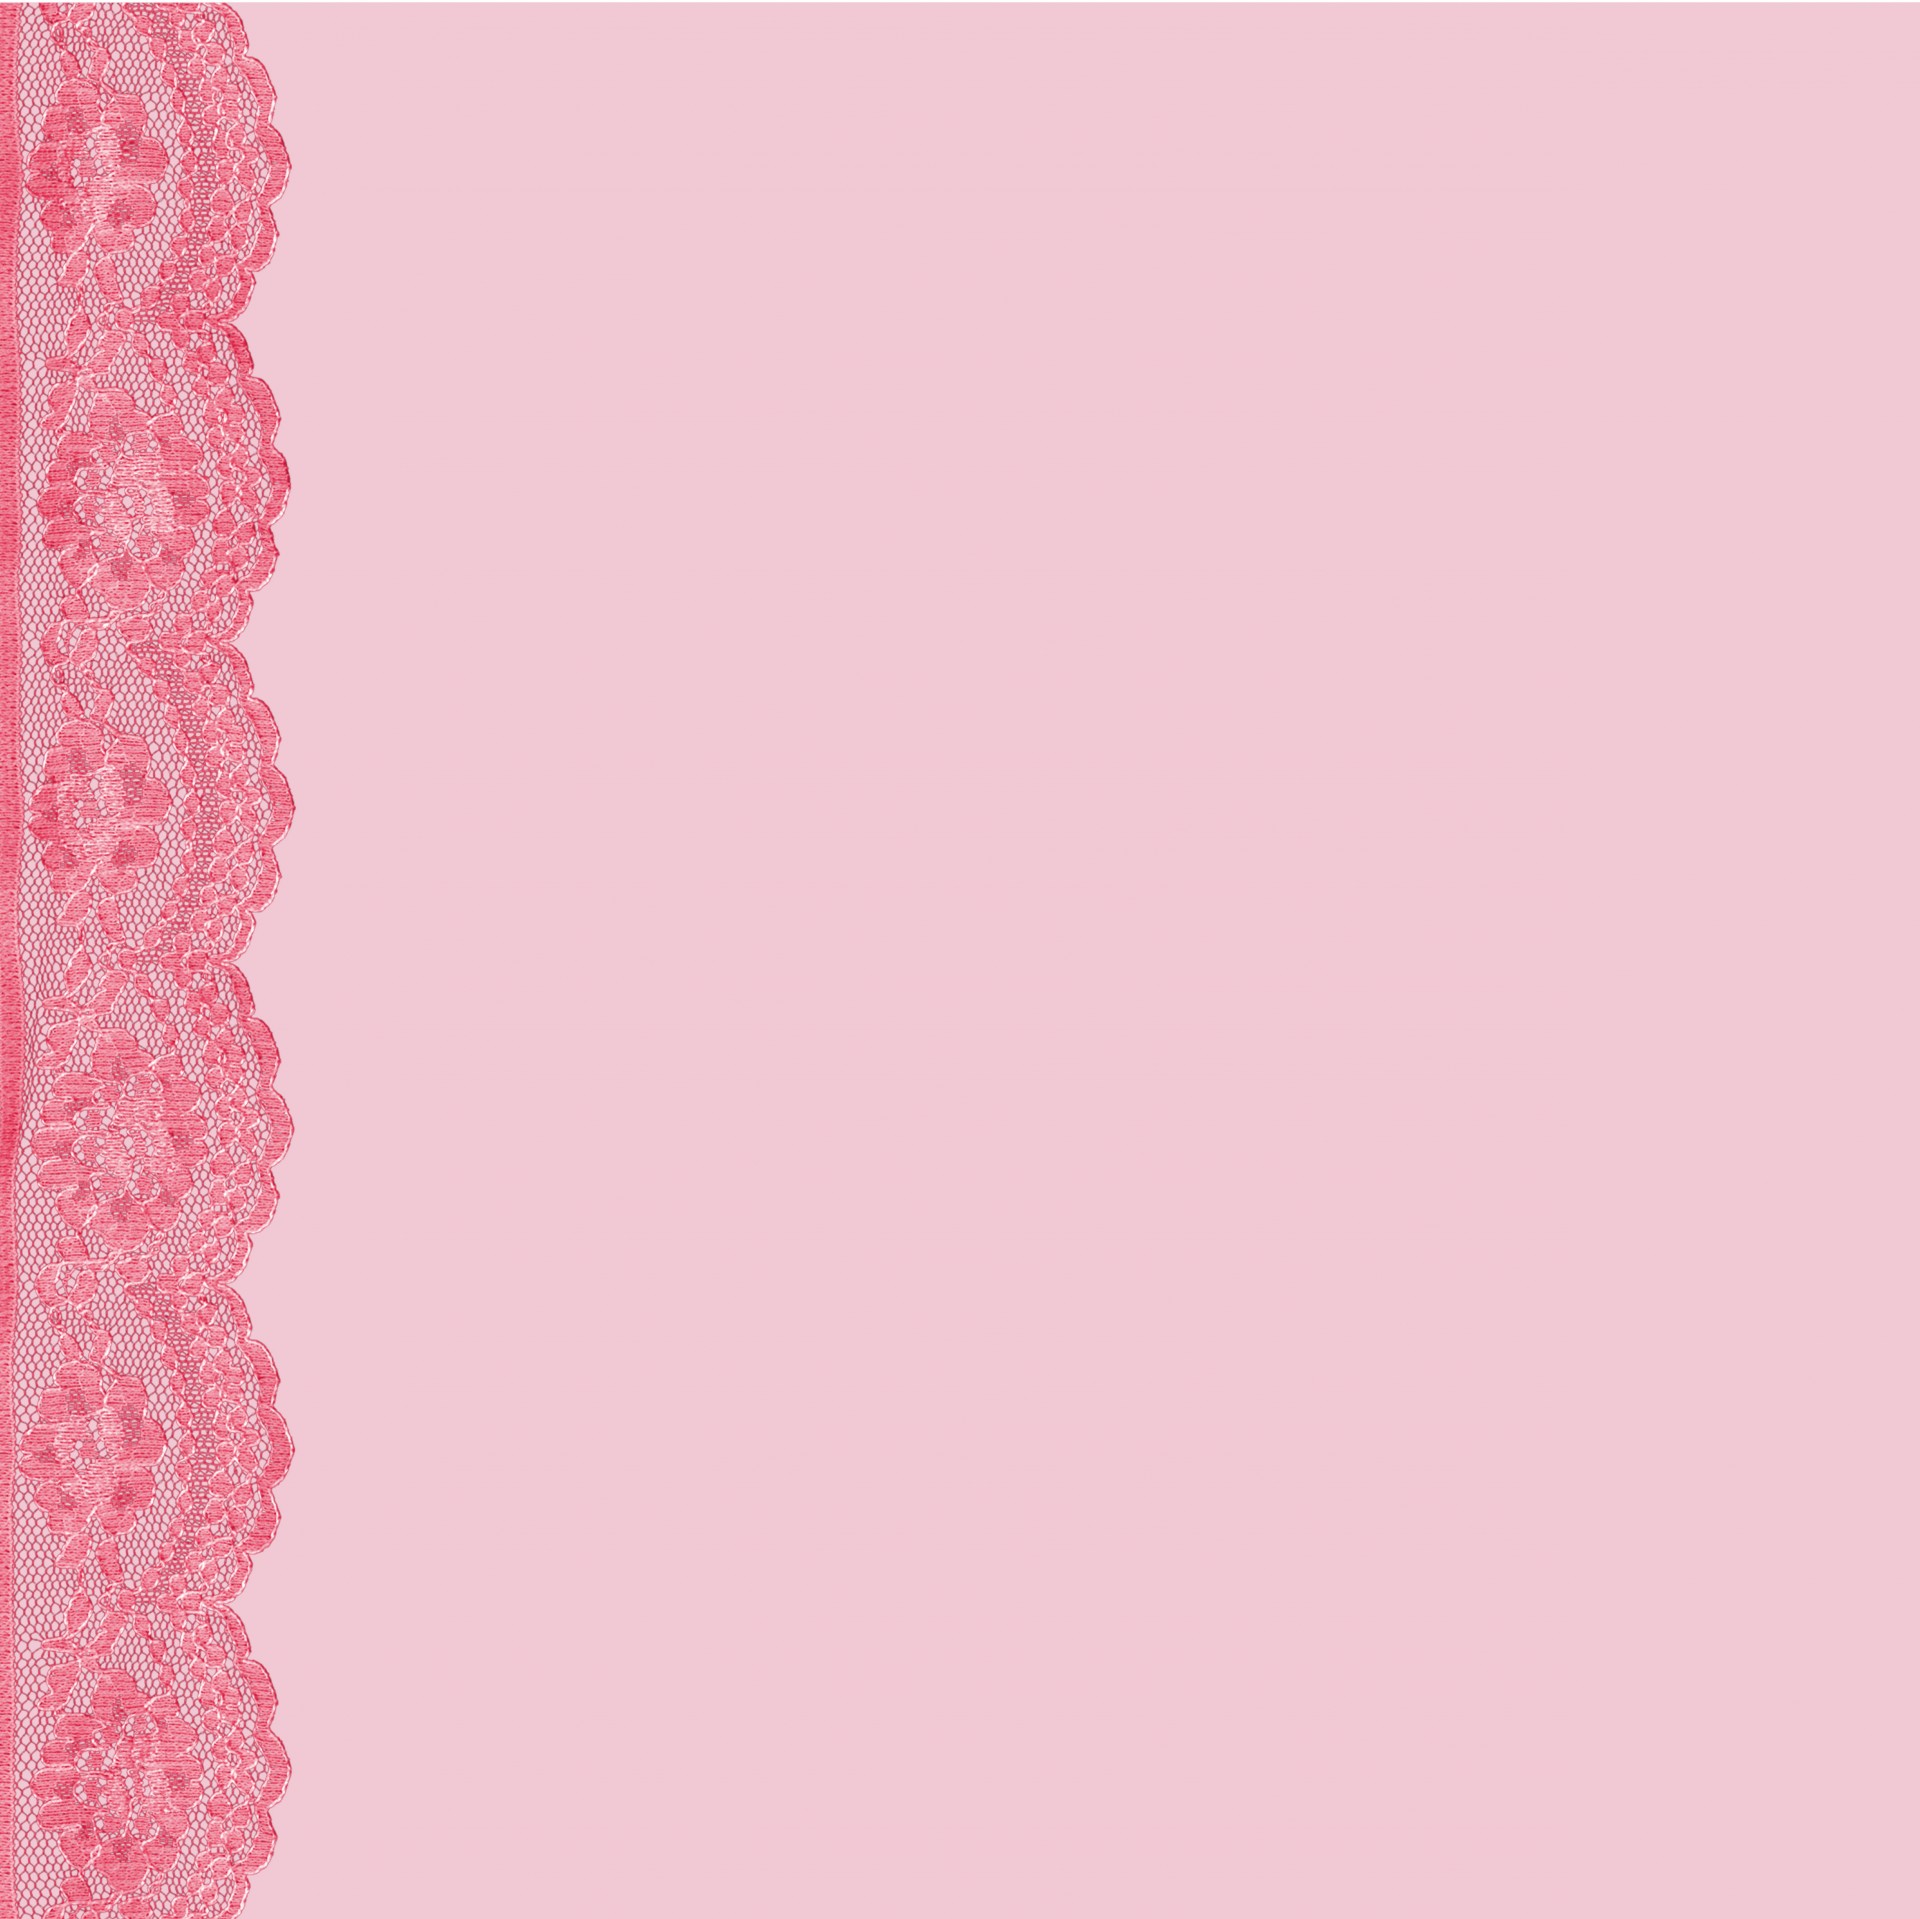 https://storage.needpix.com/rsynced_images/pink-lace-background.jpg